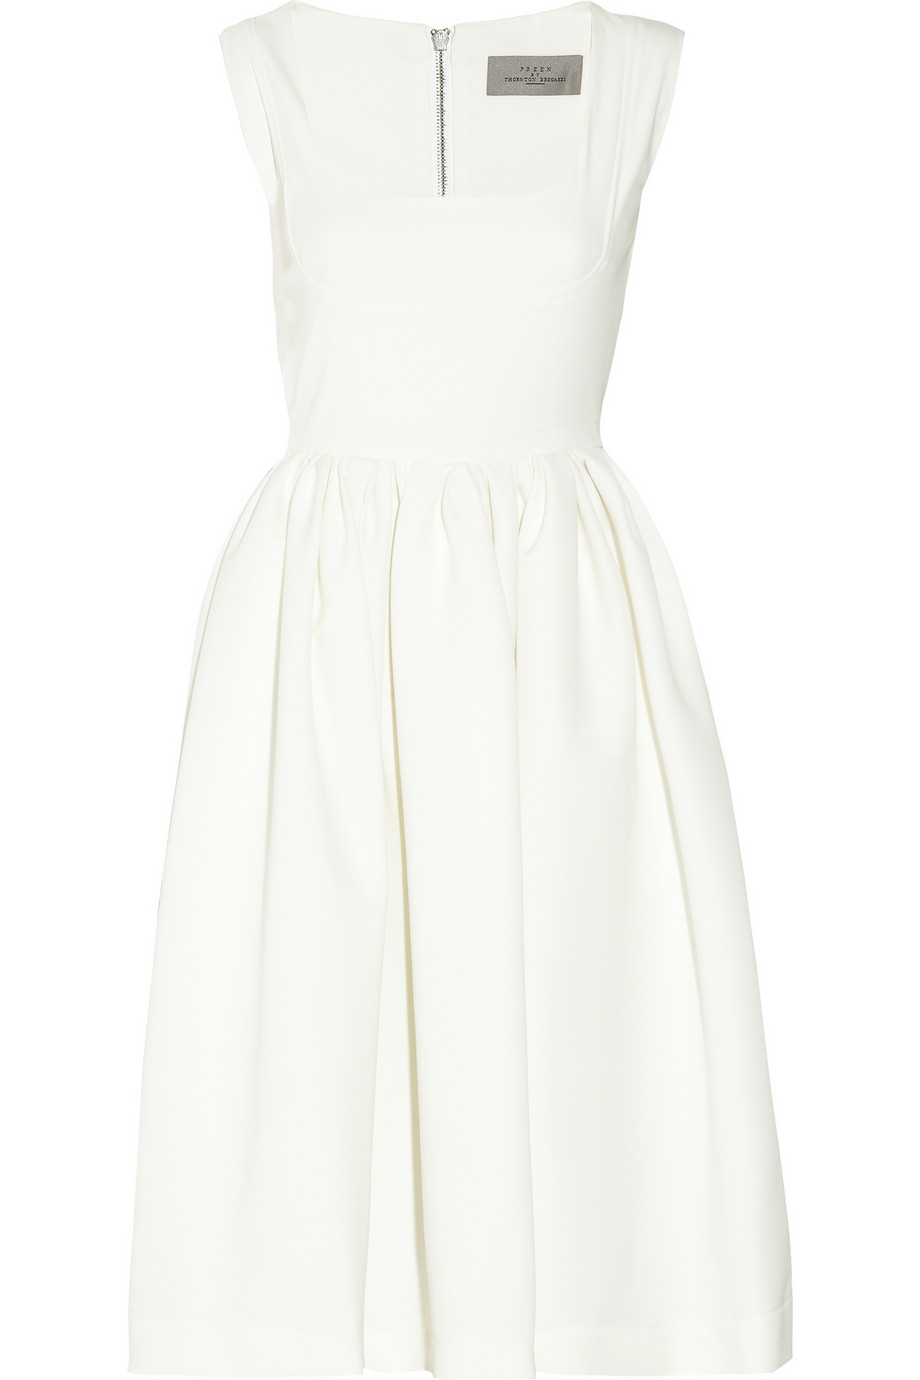 Lyst - Preen By Thornton Bregazzi Regan Stretchcrepe Dress in White